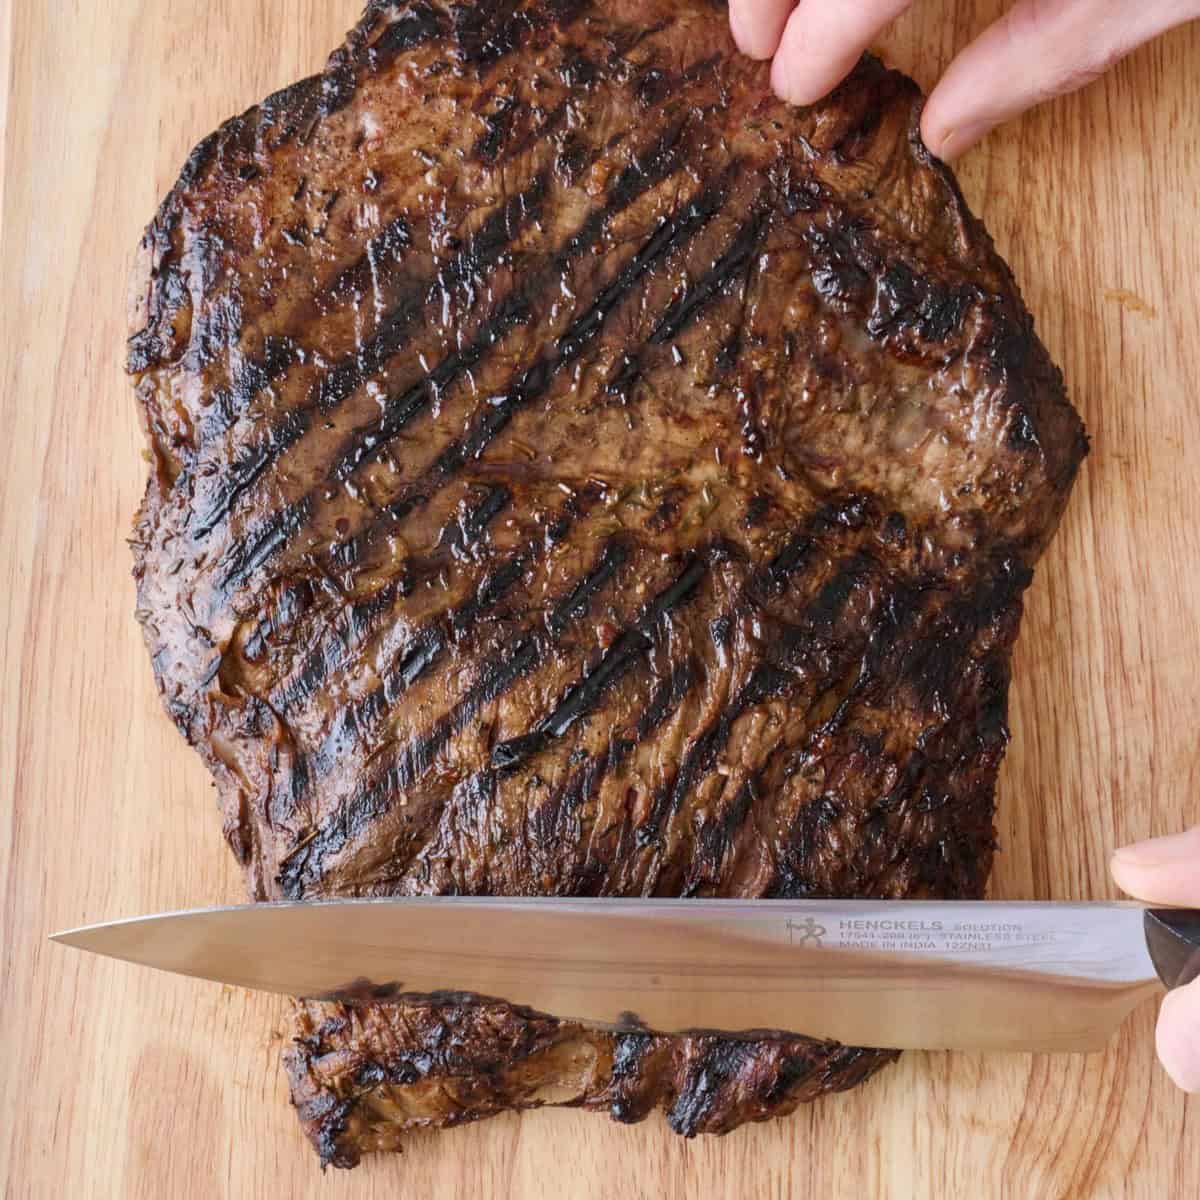 Tutorial for cutting steak against the grain.